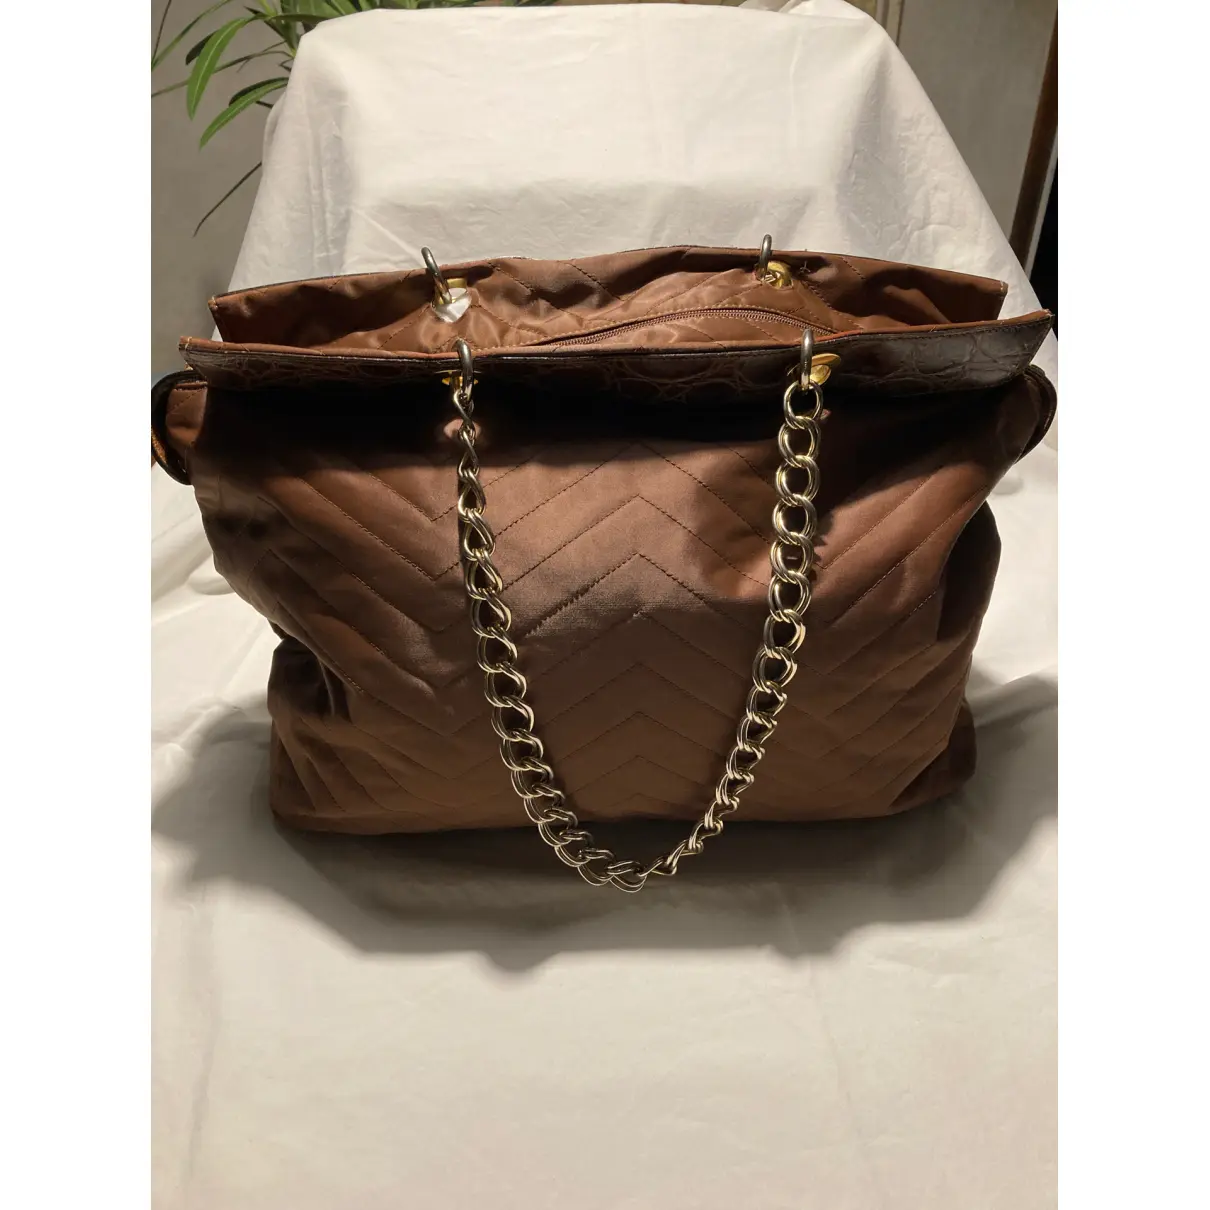 Buy Gianfranco Ferré Silk handbag online